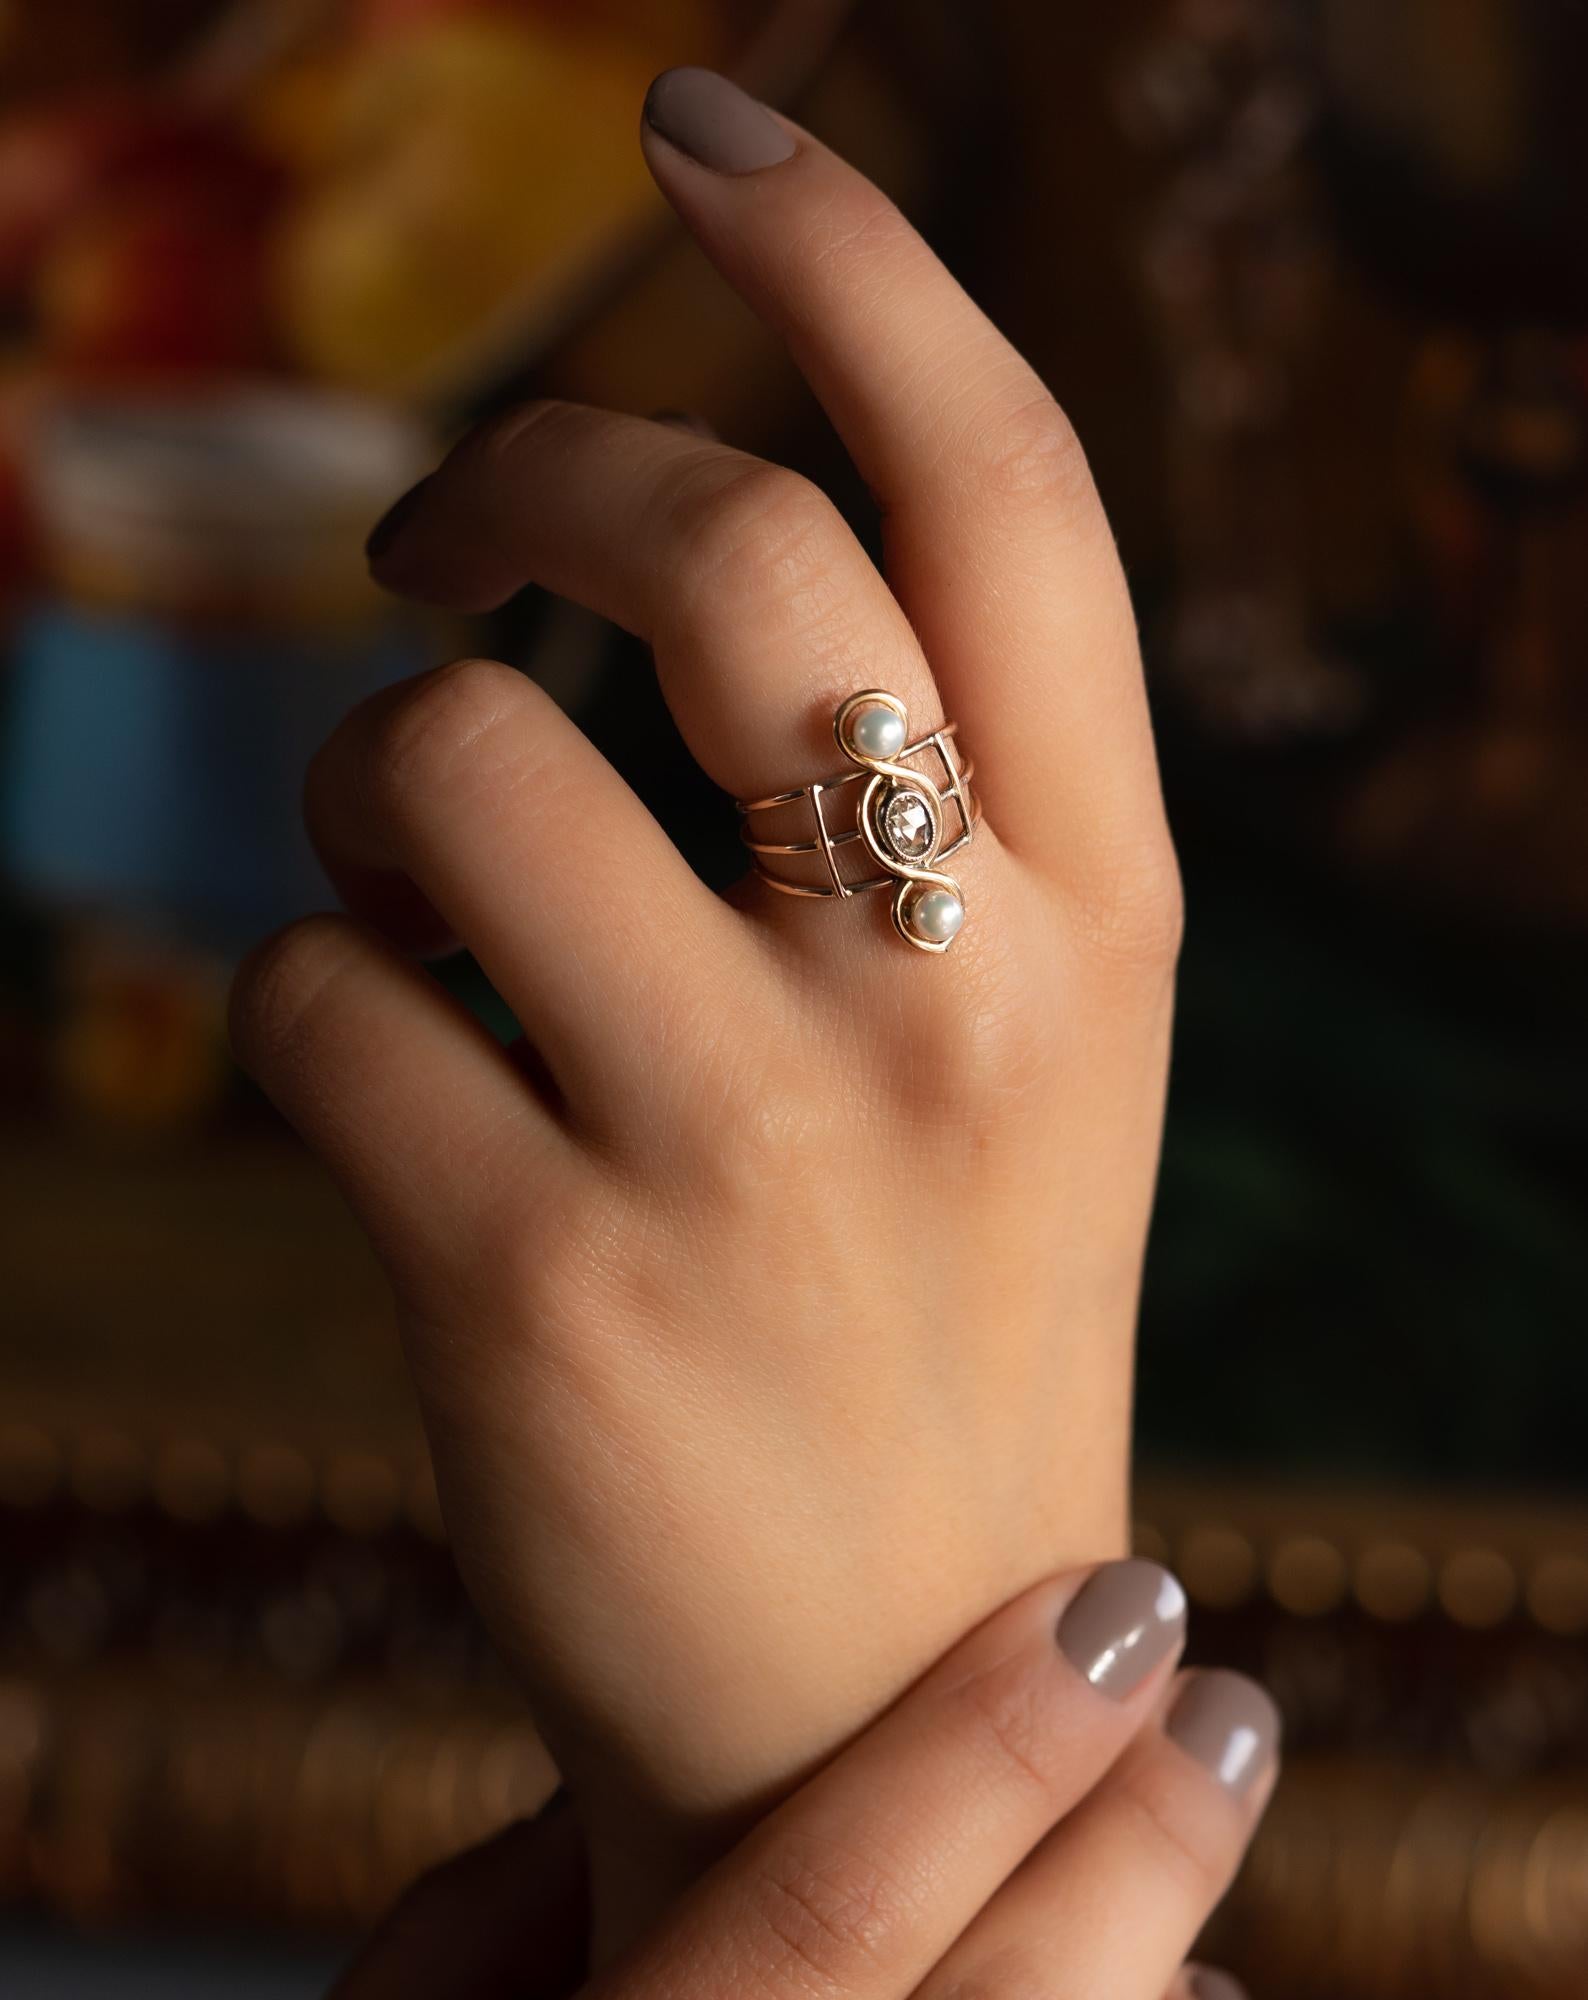 0.8 carat oval diamond ring on hand